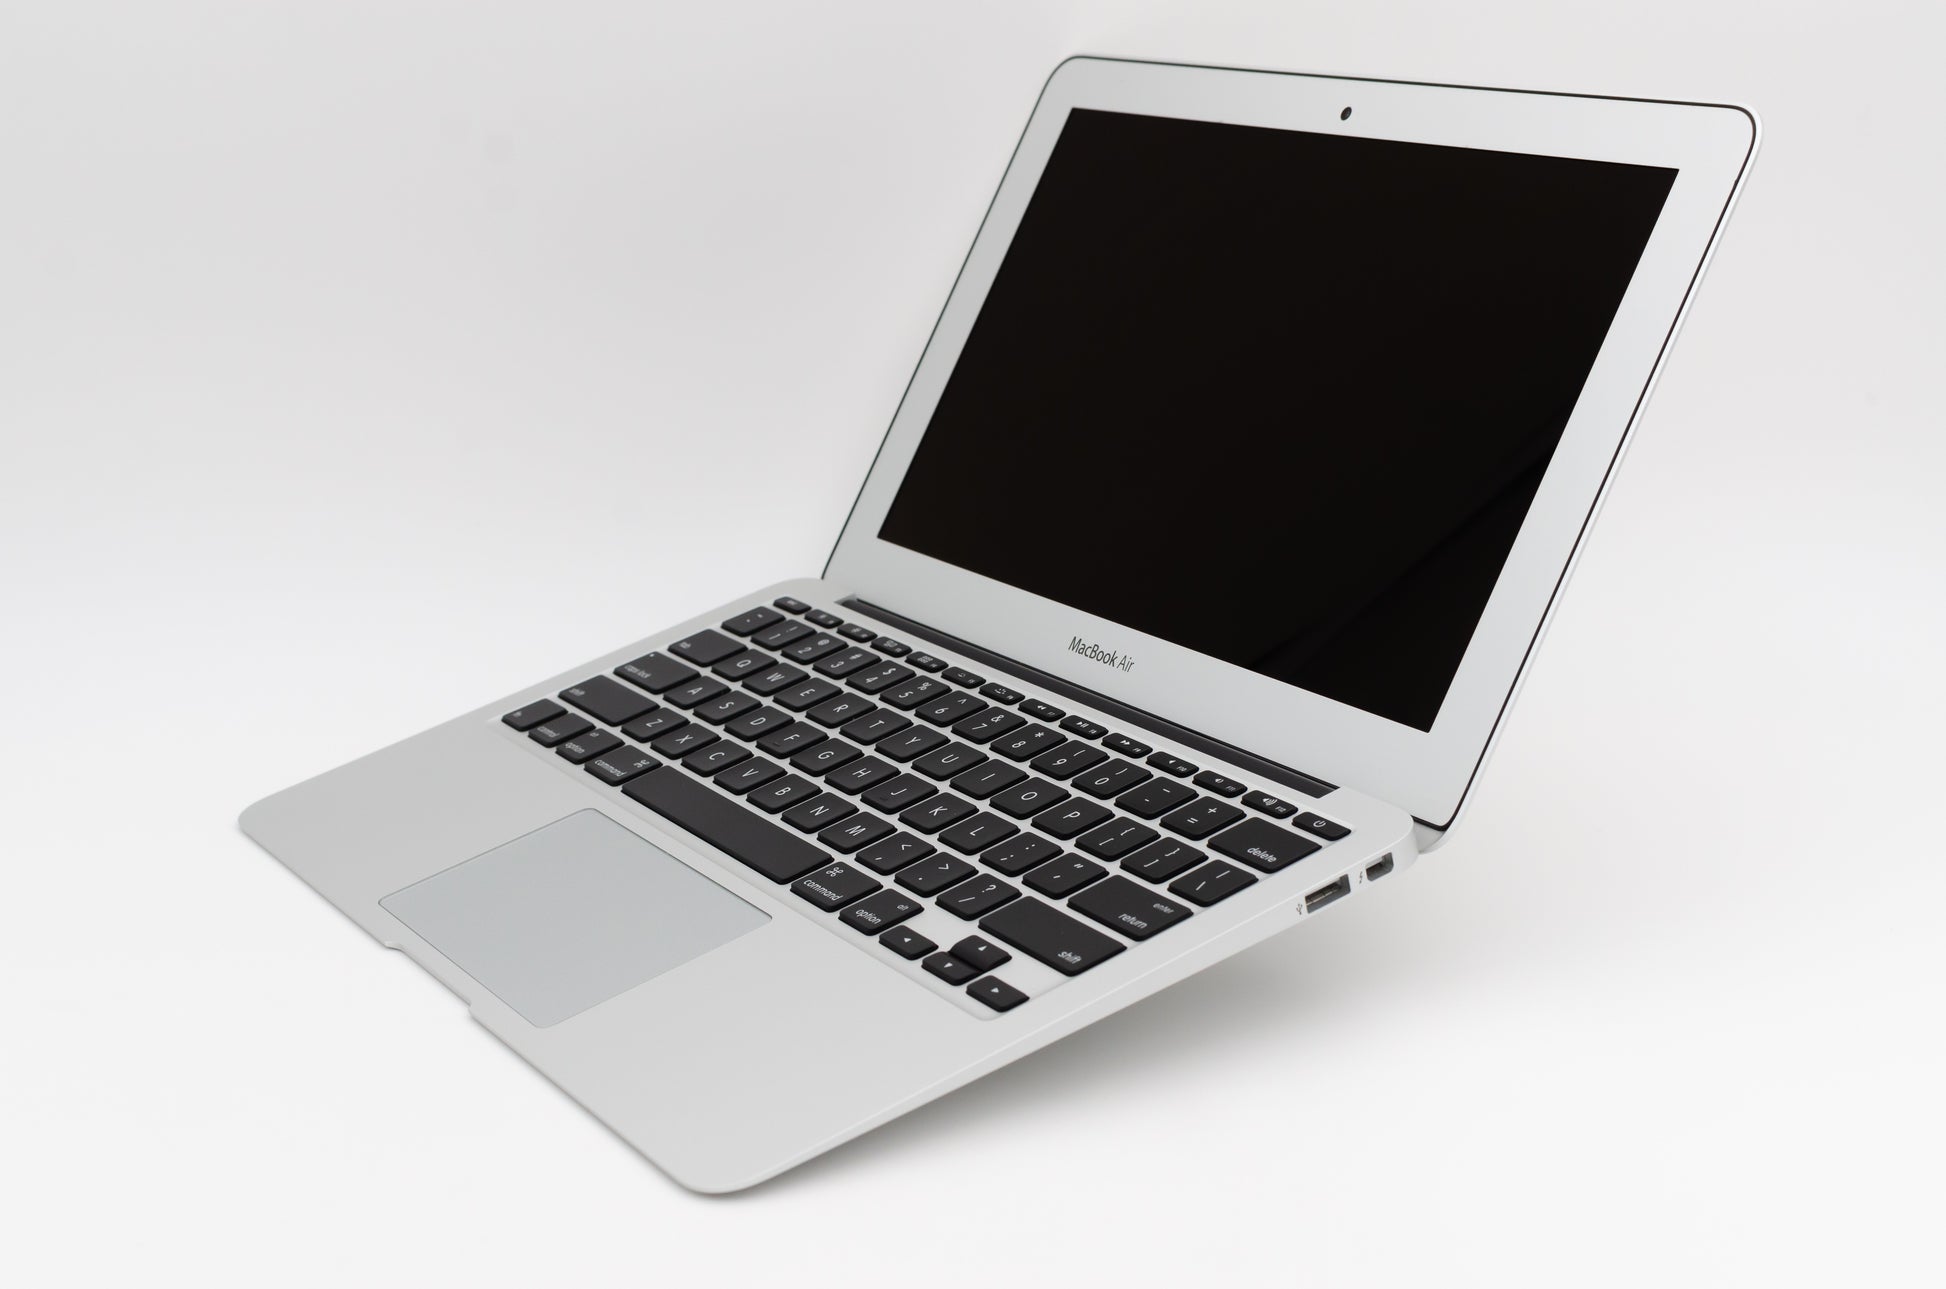 apple-mid-2012-11.6-inch-macbook-air-a1465-aluminum-dci7 - 2ghz processor, 8gb ram, hd 4000 - 512mb gpu-md845ll/a-2